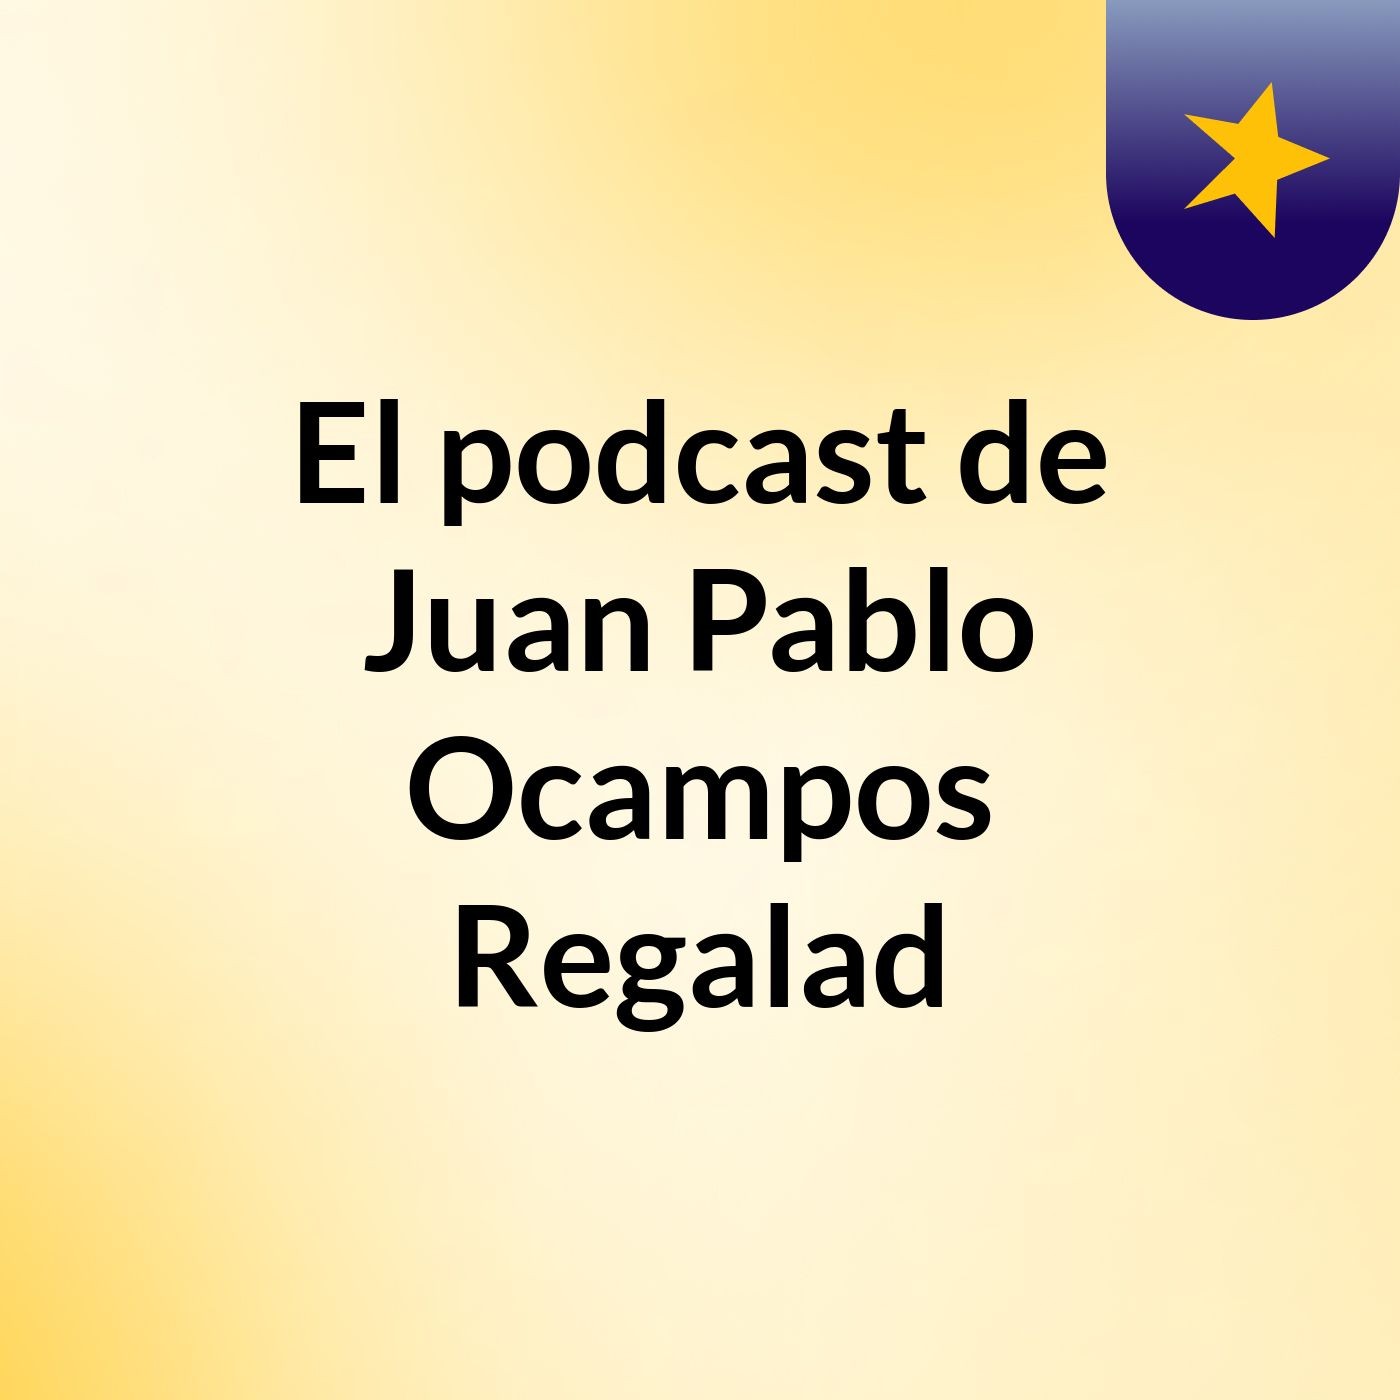 El podcast de Juan Pablo Ocampos Regalad